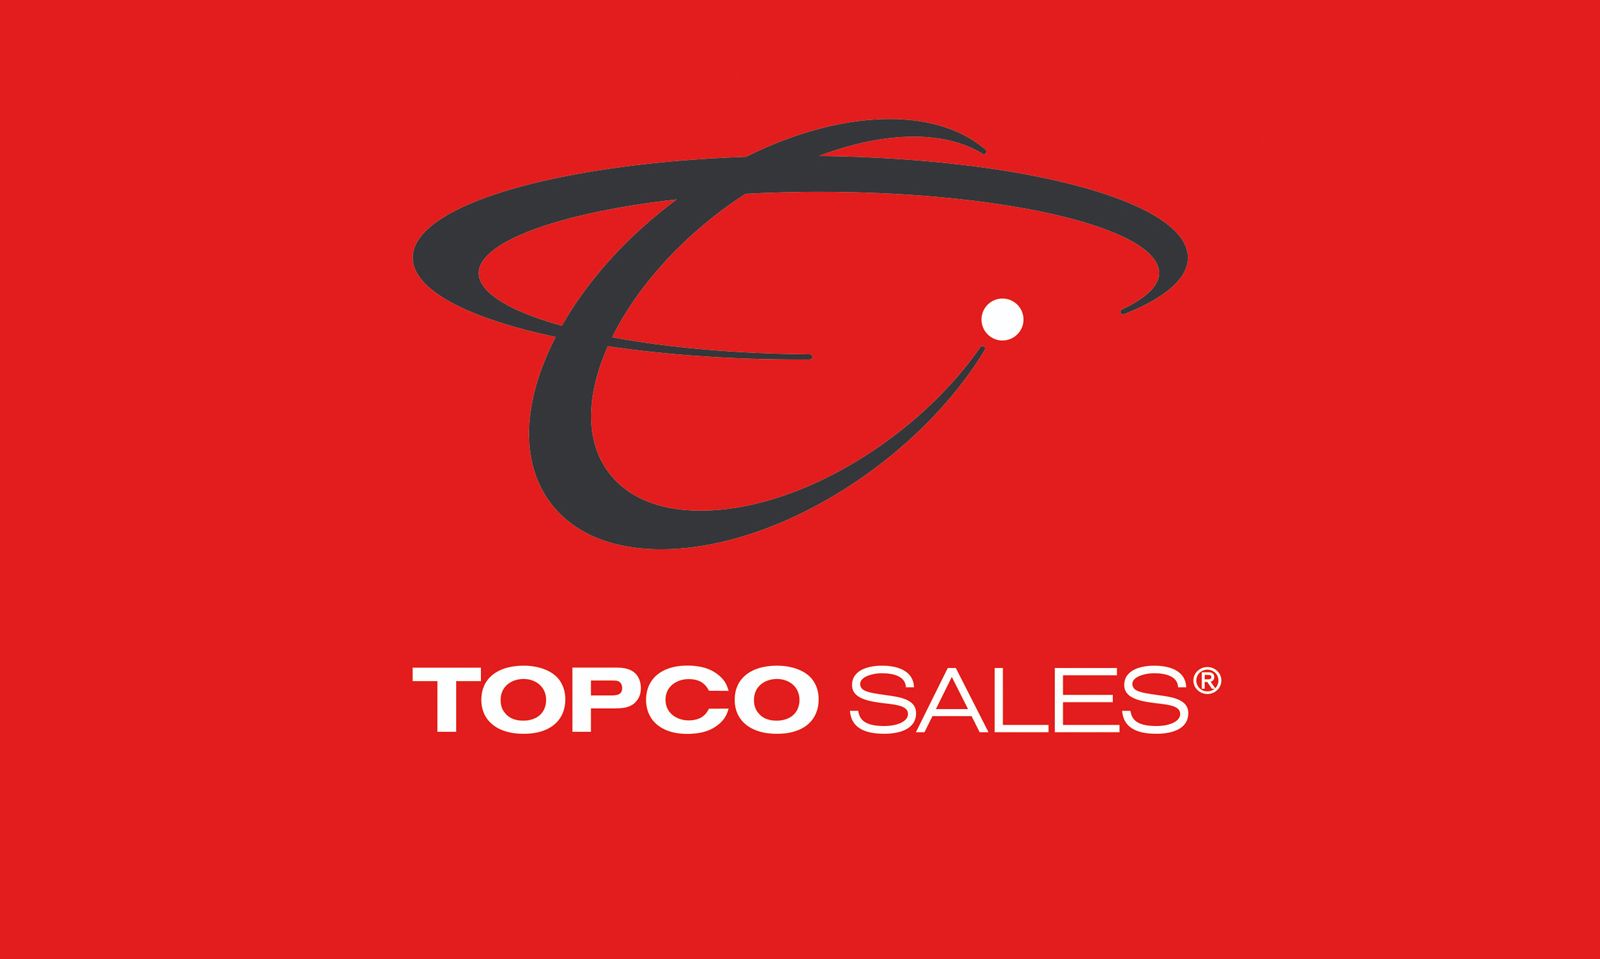 Topco Sales Adds to Popular Line